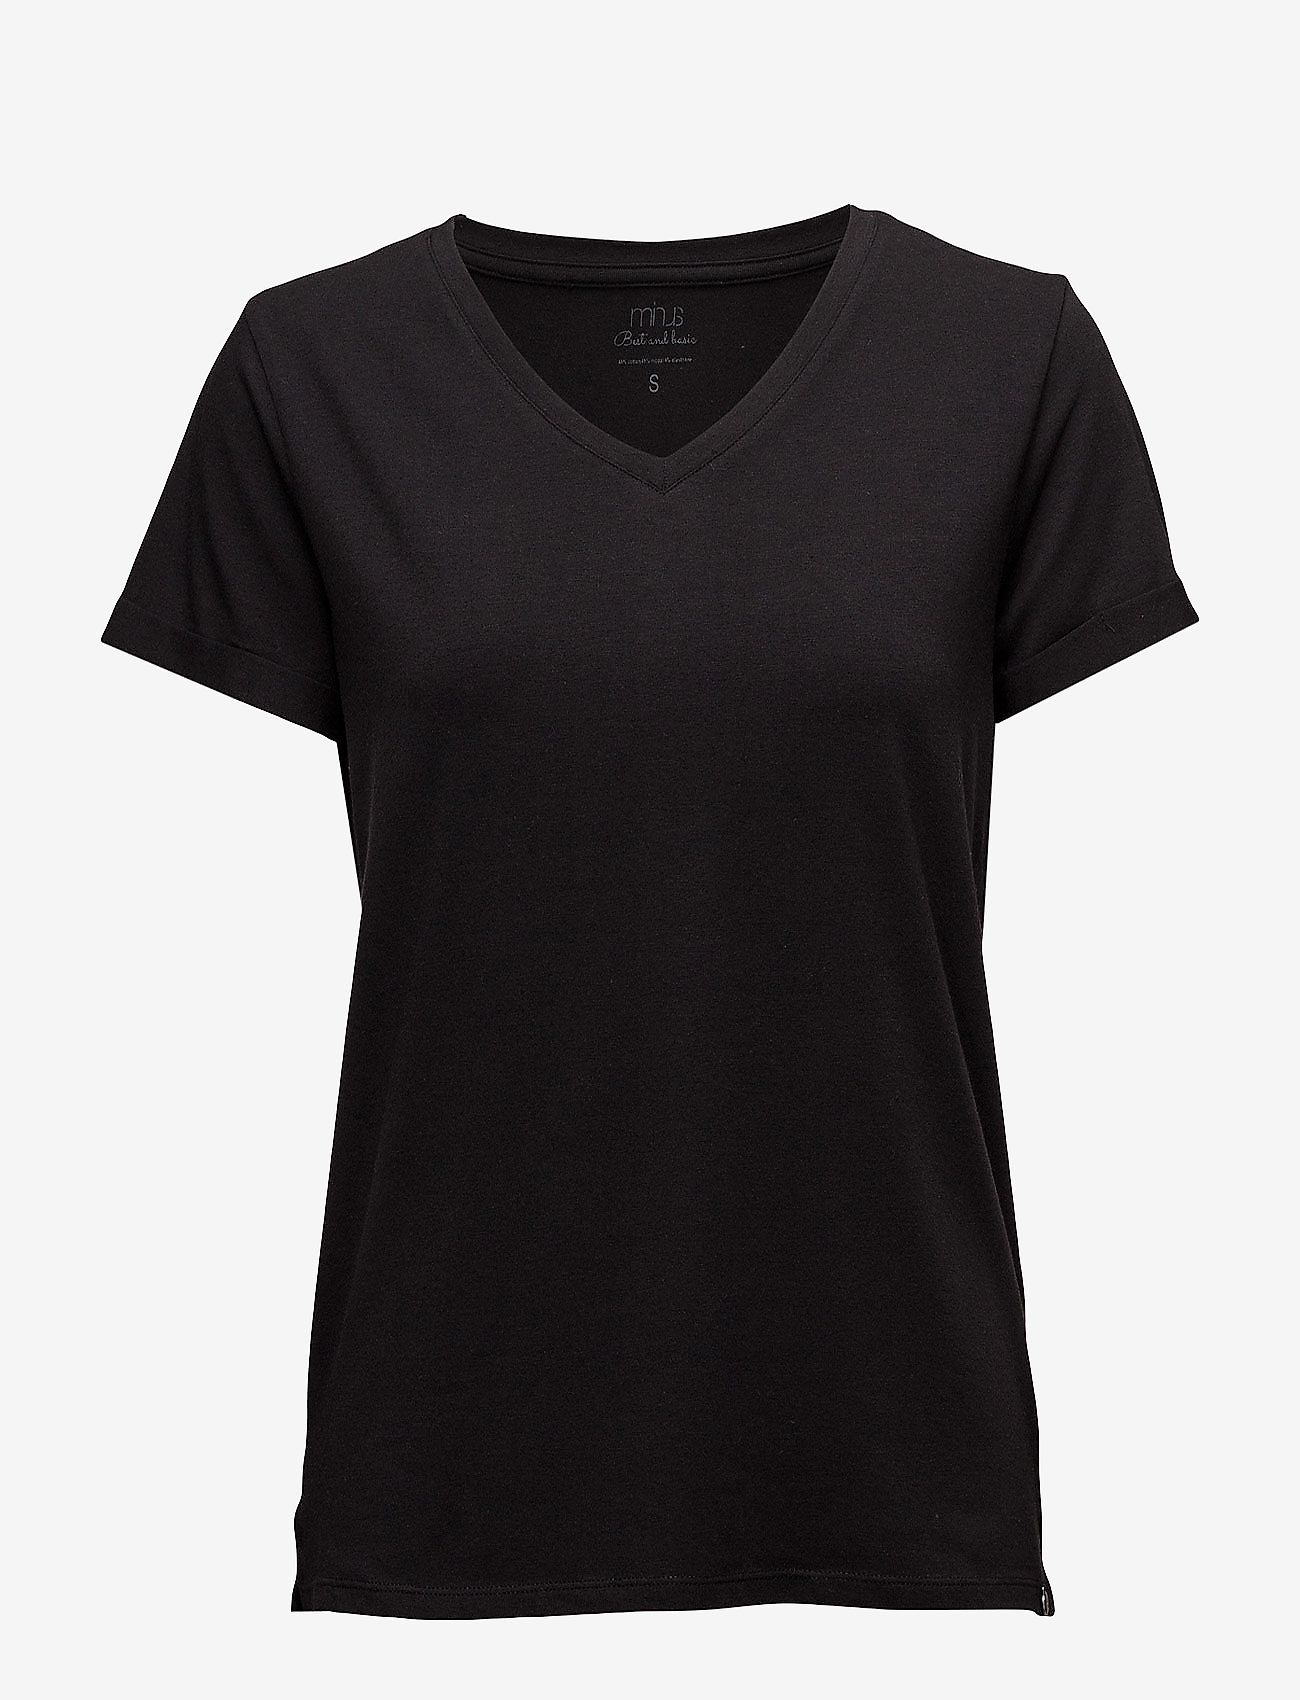 Minus - Adele tee - t-shirts - black - 1